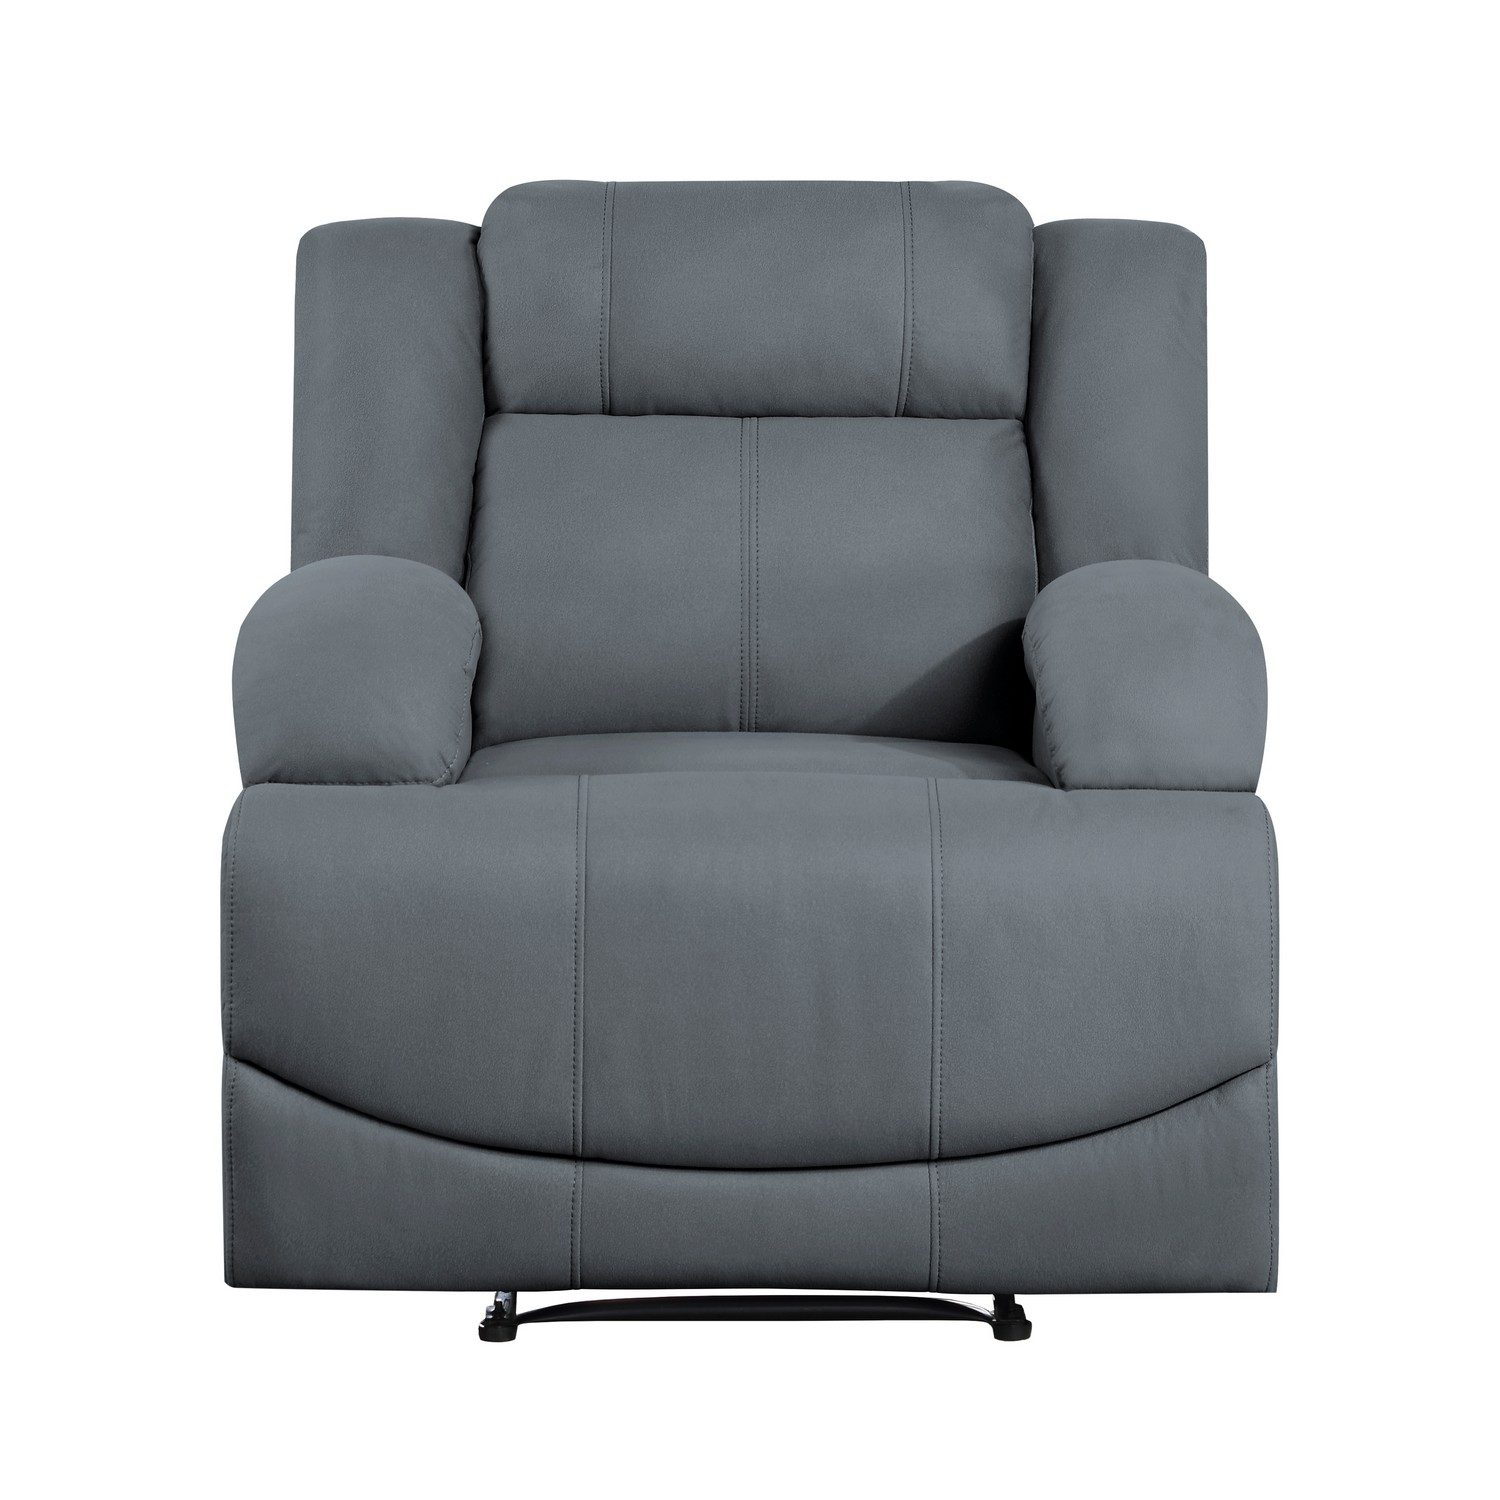 Homelegance Camryn Reclining Chair - Graphite blue